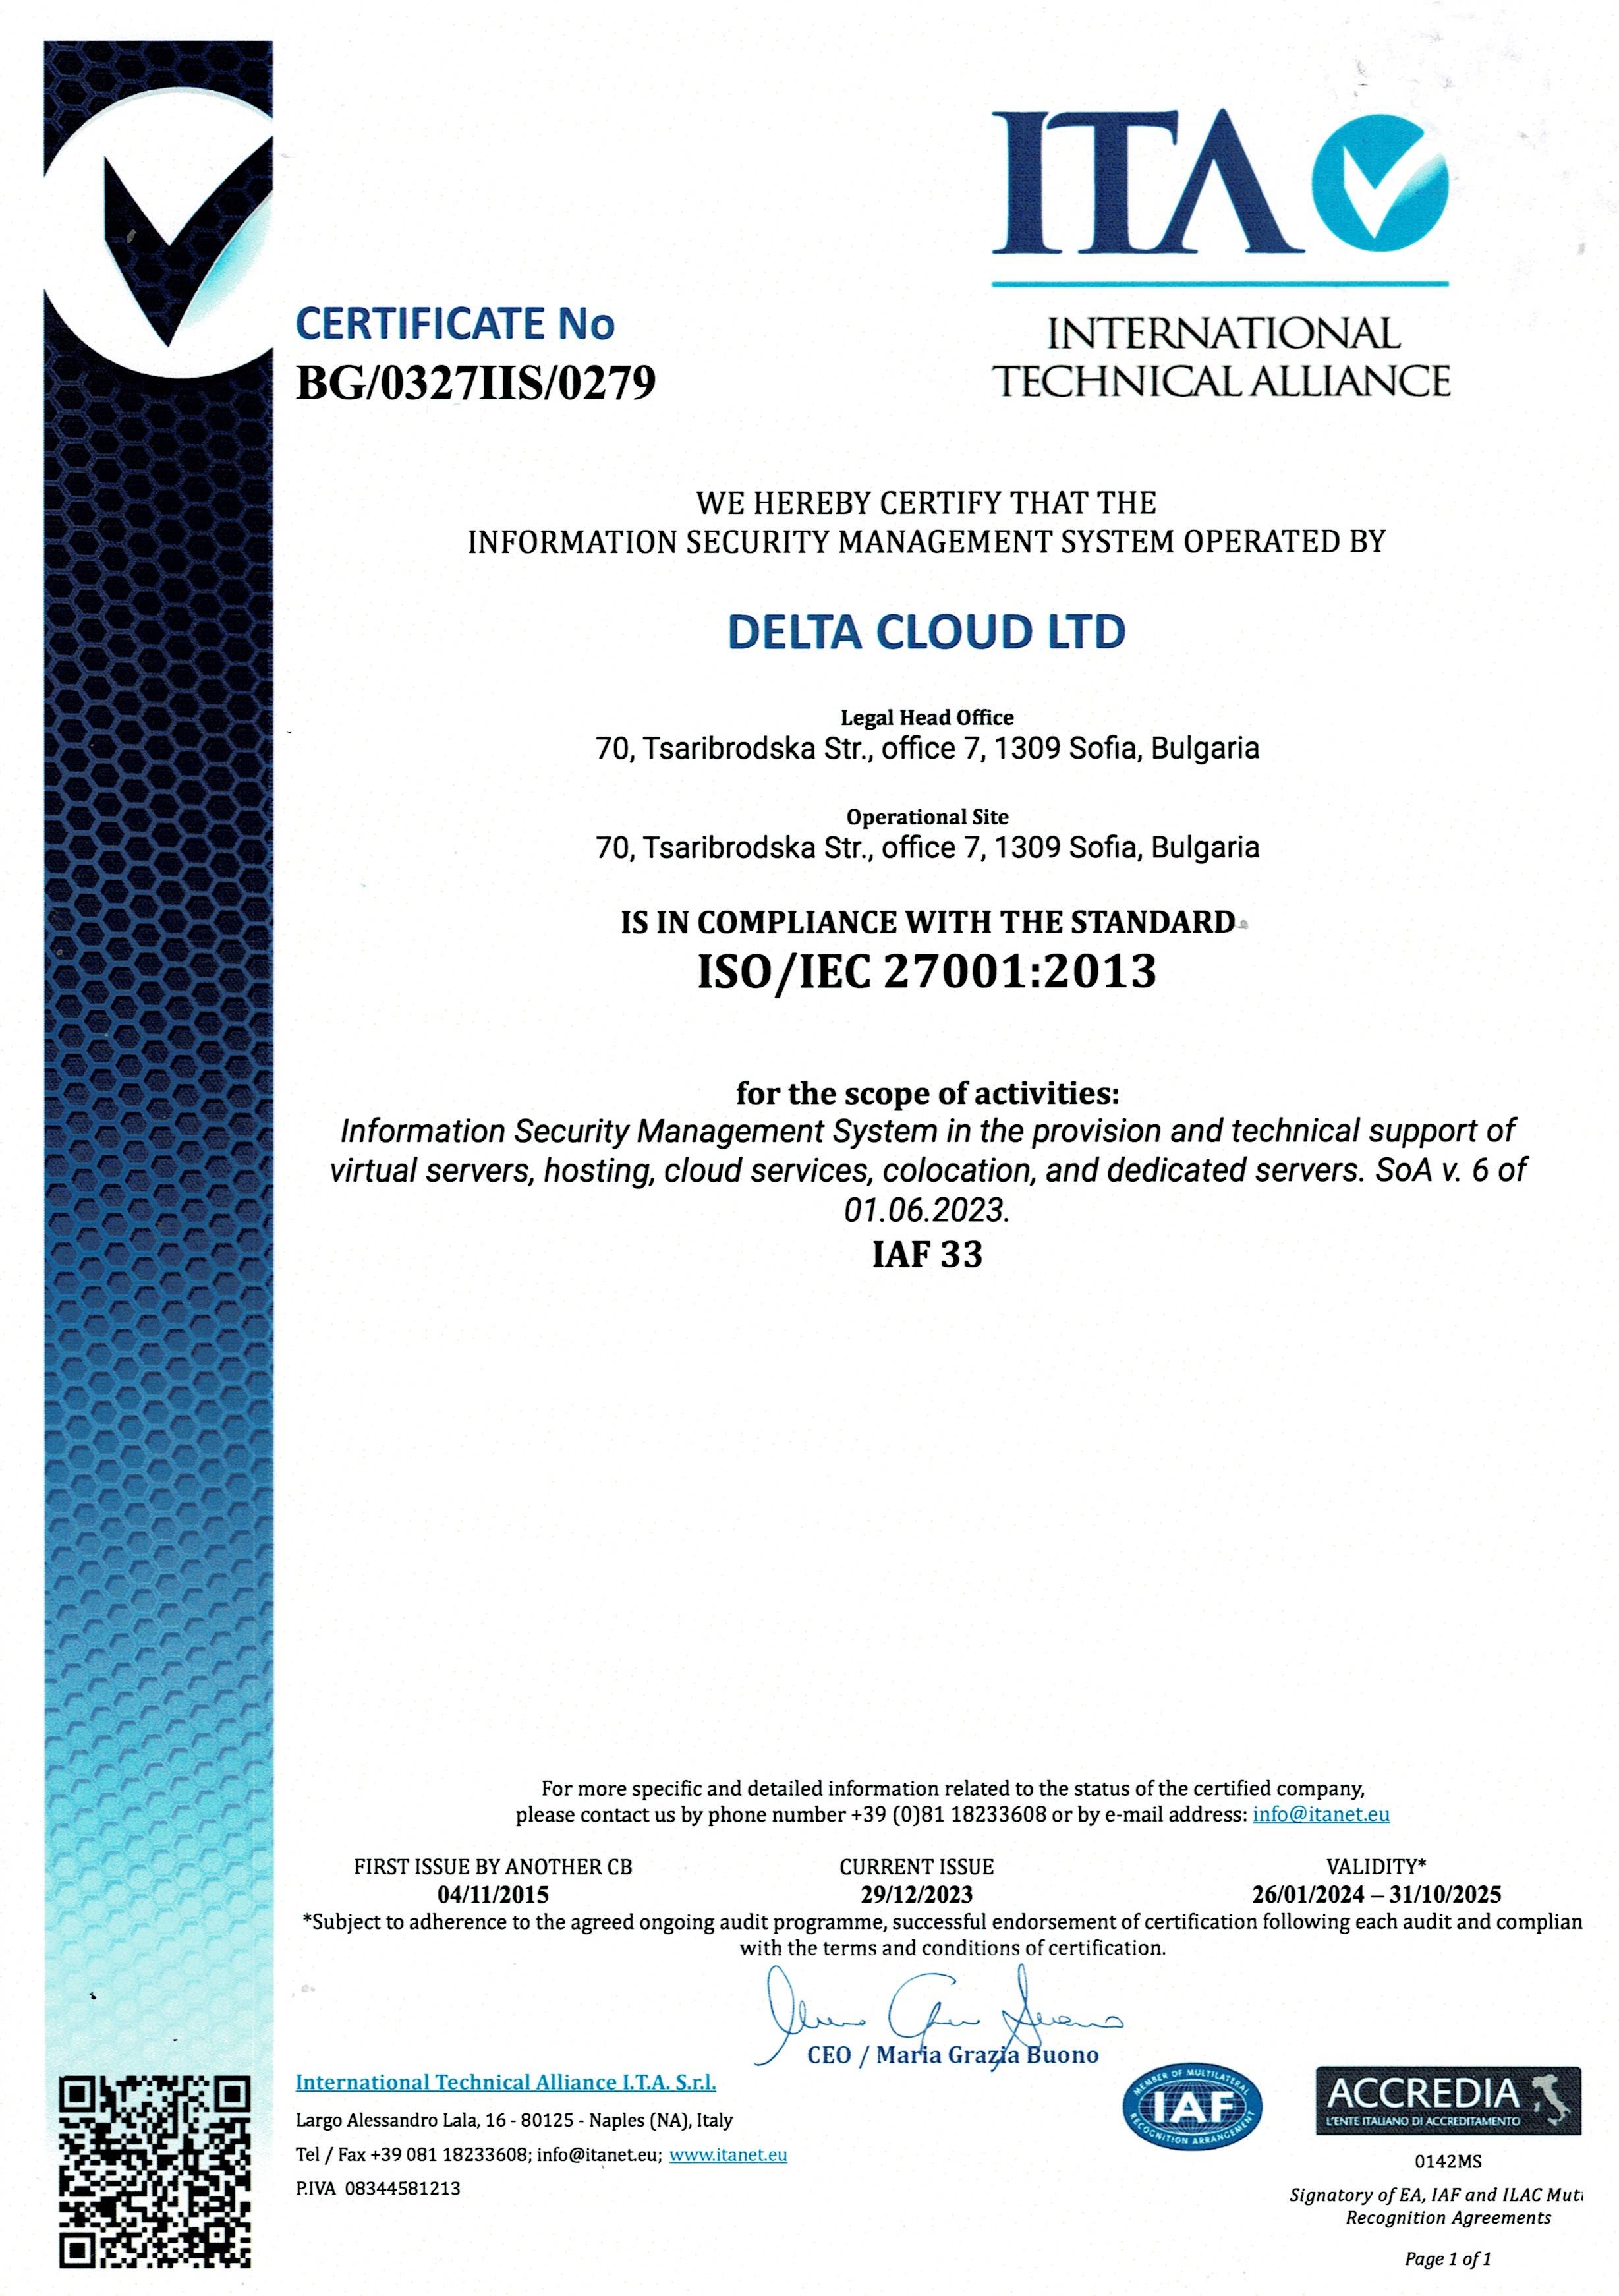 Security guarantee - ISO/IEC 27001:2013